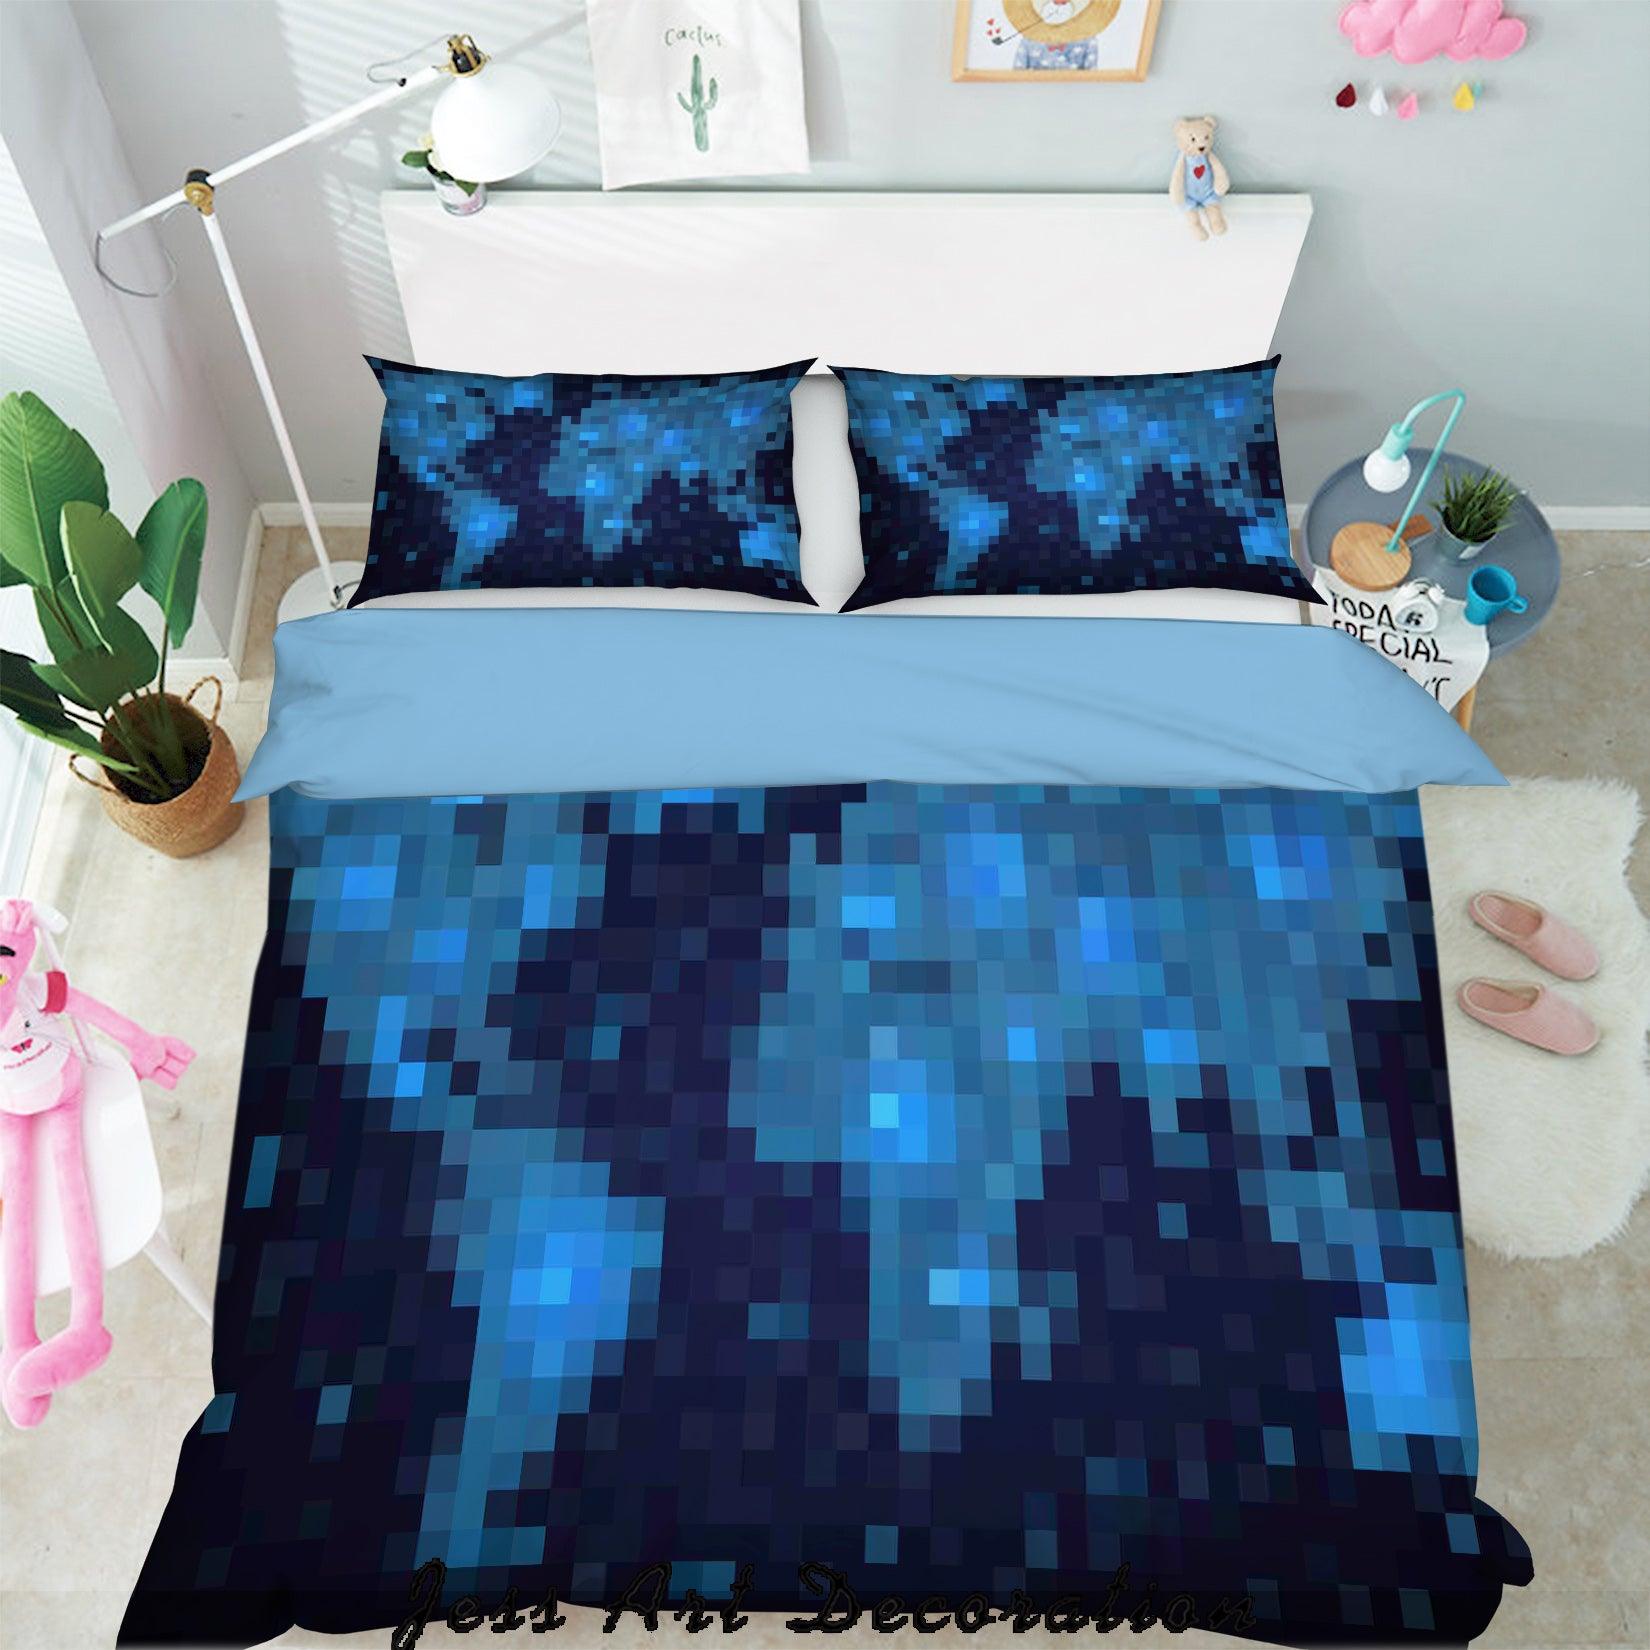 3D Mosaic World Map Quilt Cover Set Bedding Set Pillowcases  139- Jess Art Decoration